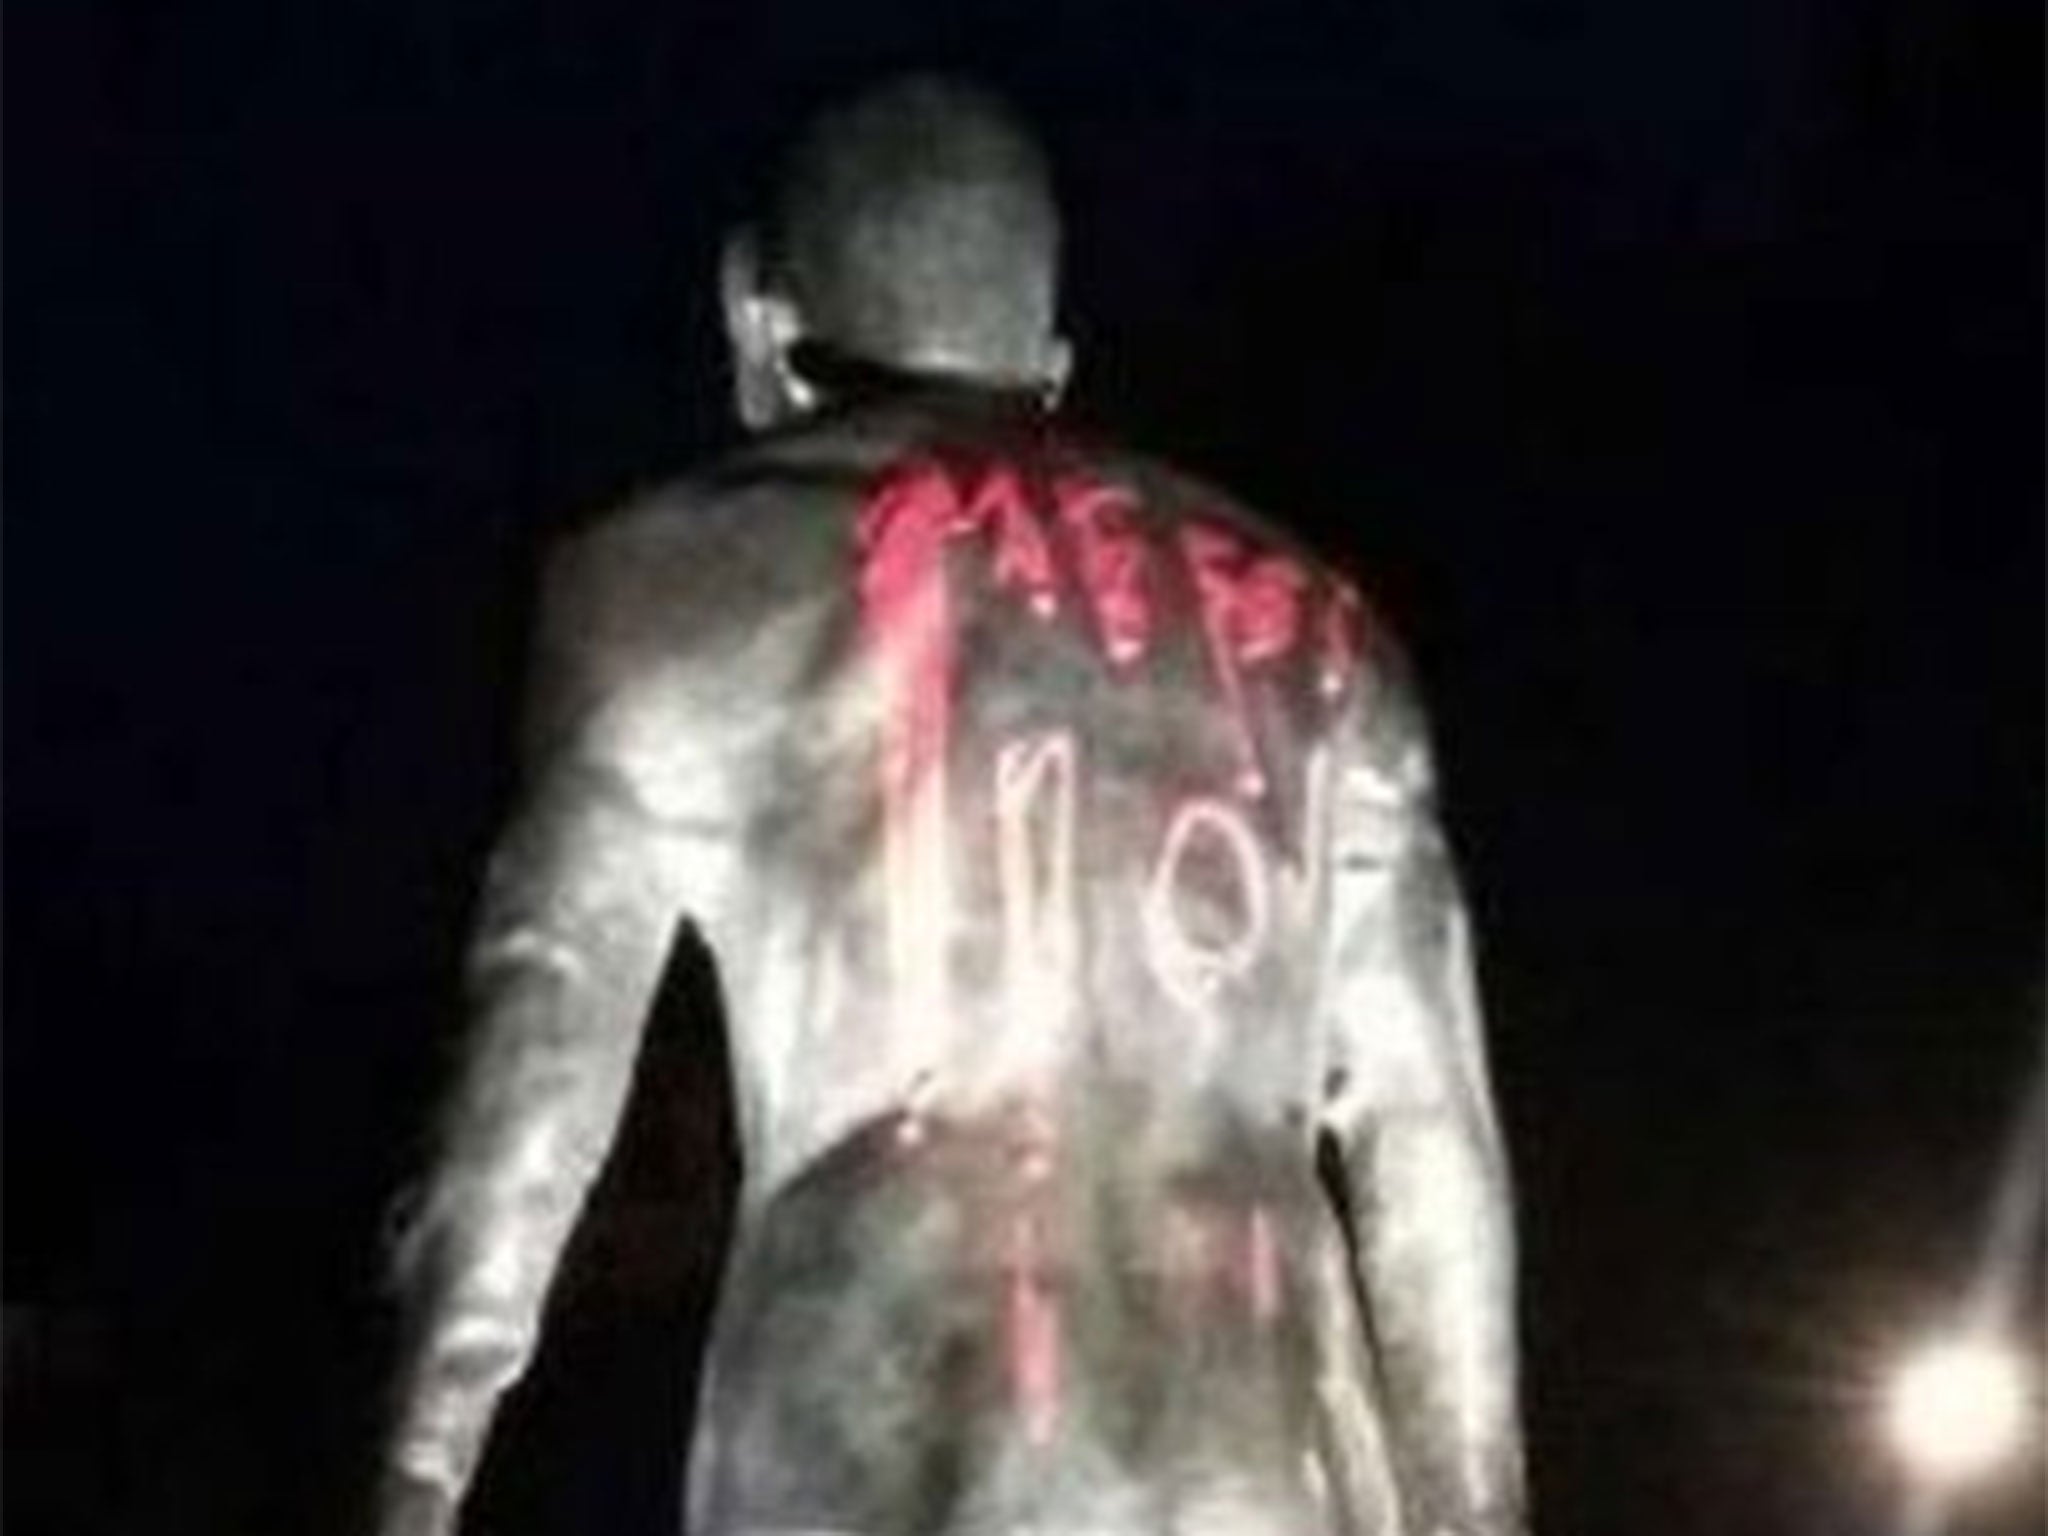 The Ronaldo statue having been daubed with graffiti